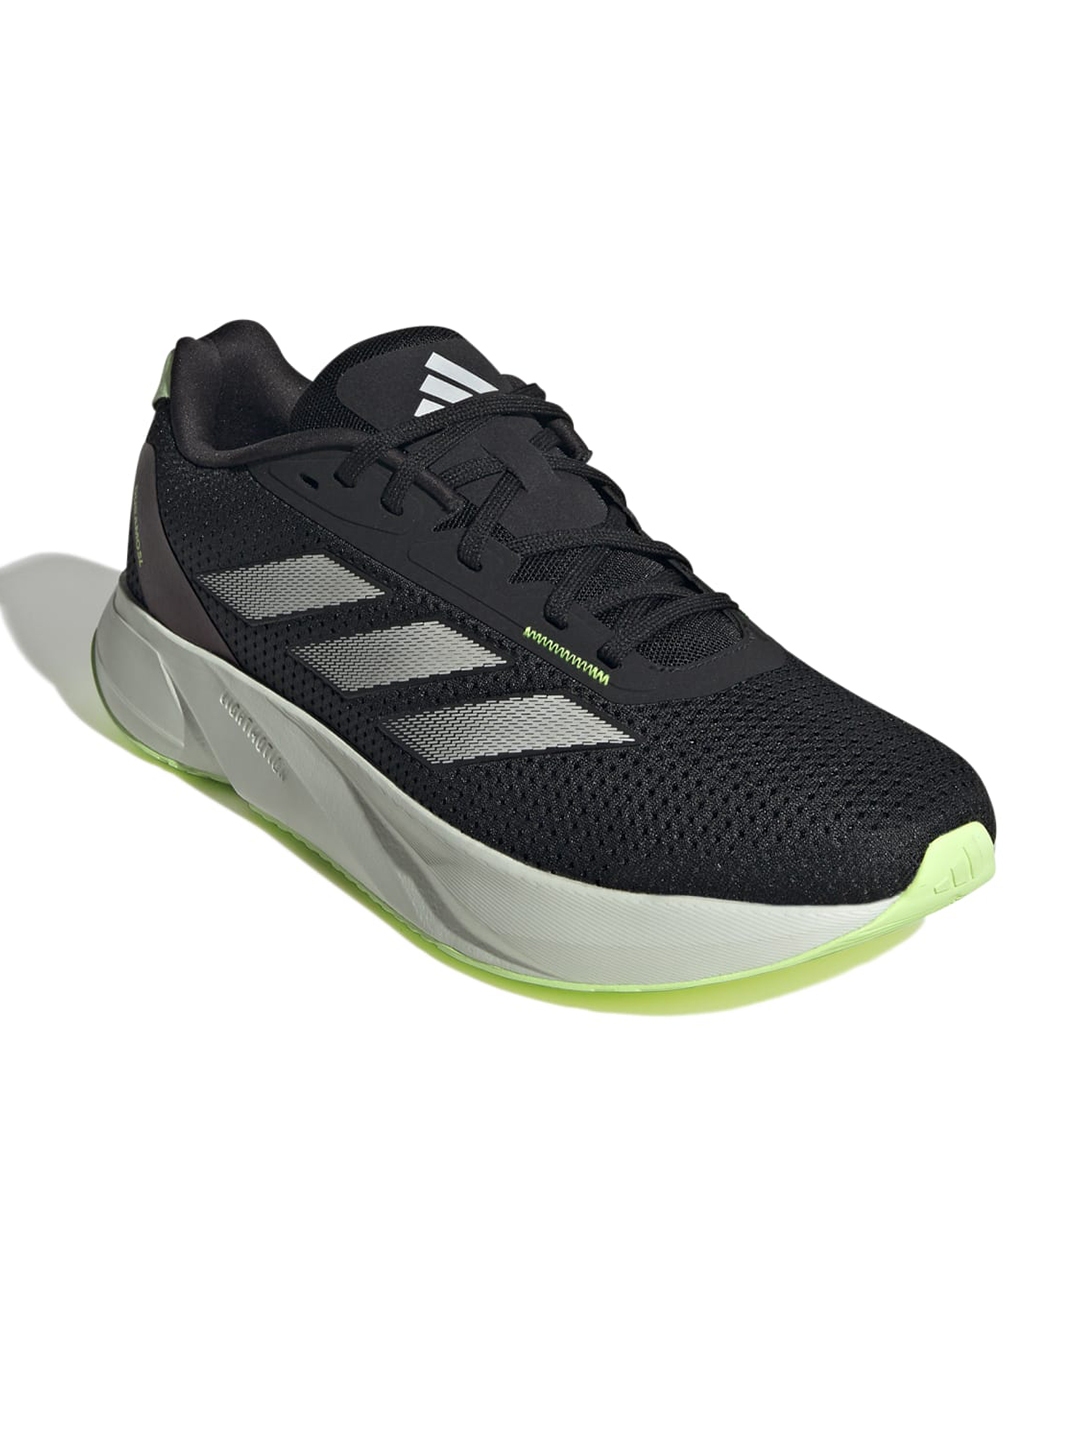 Buy ADIDAS Men DURAMO SL Running Shoes - Sports Shoes for Men 26238960 ...